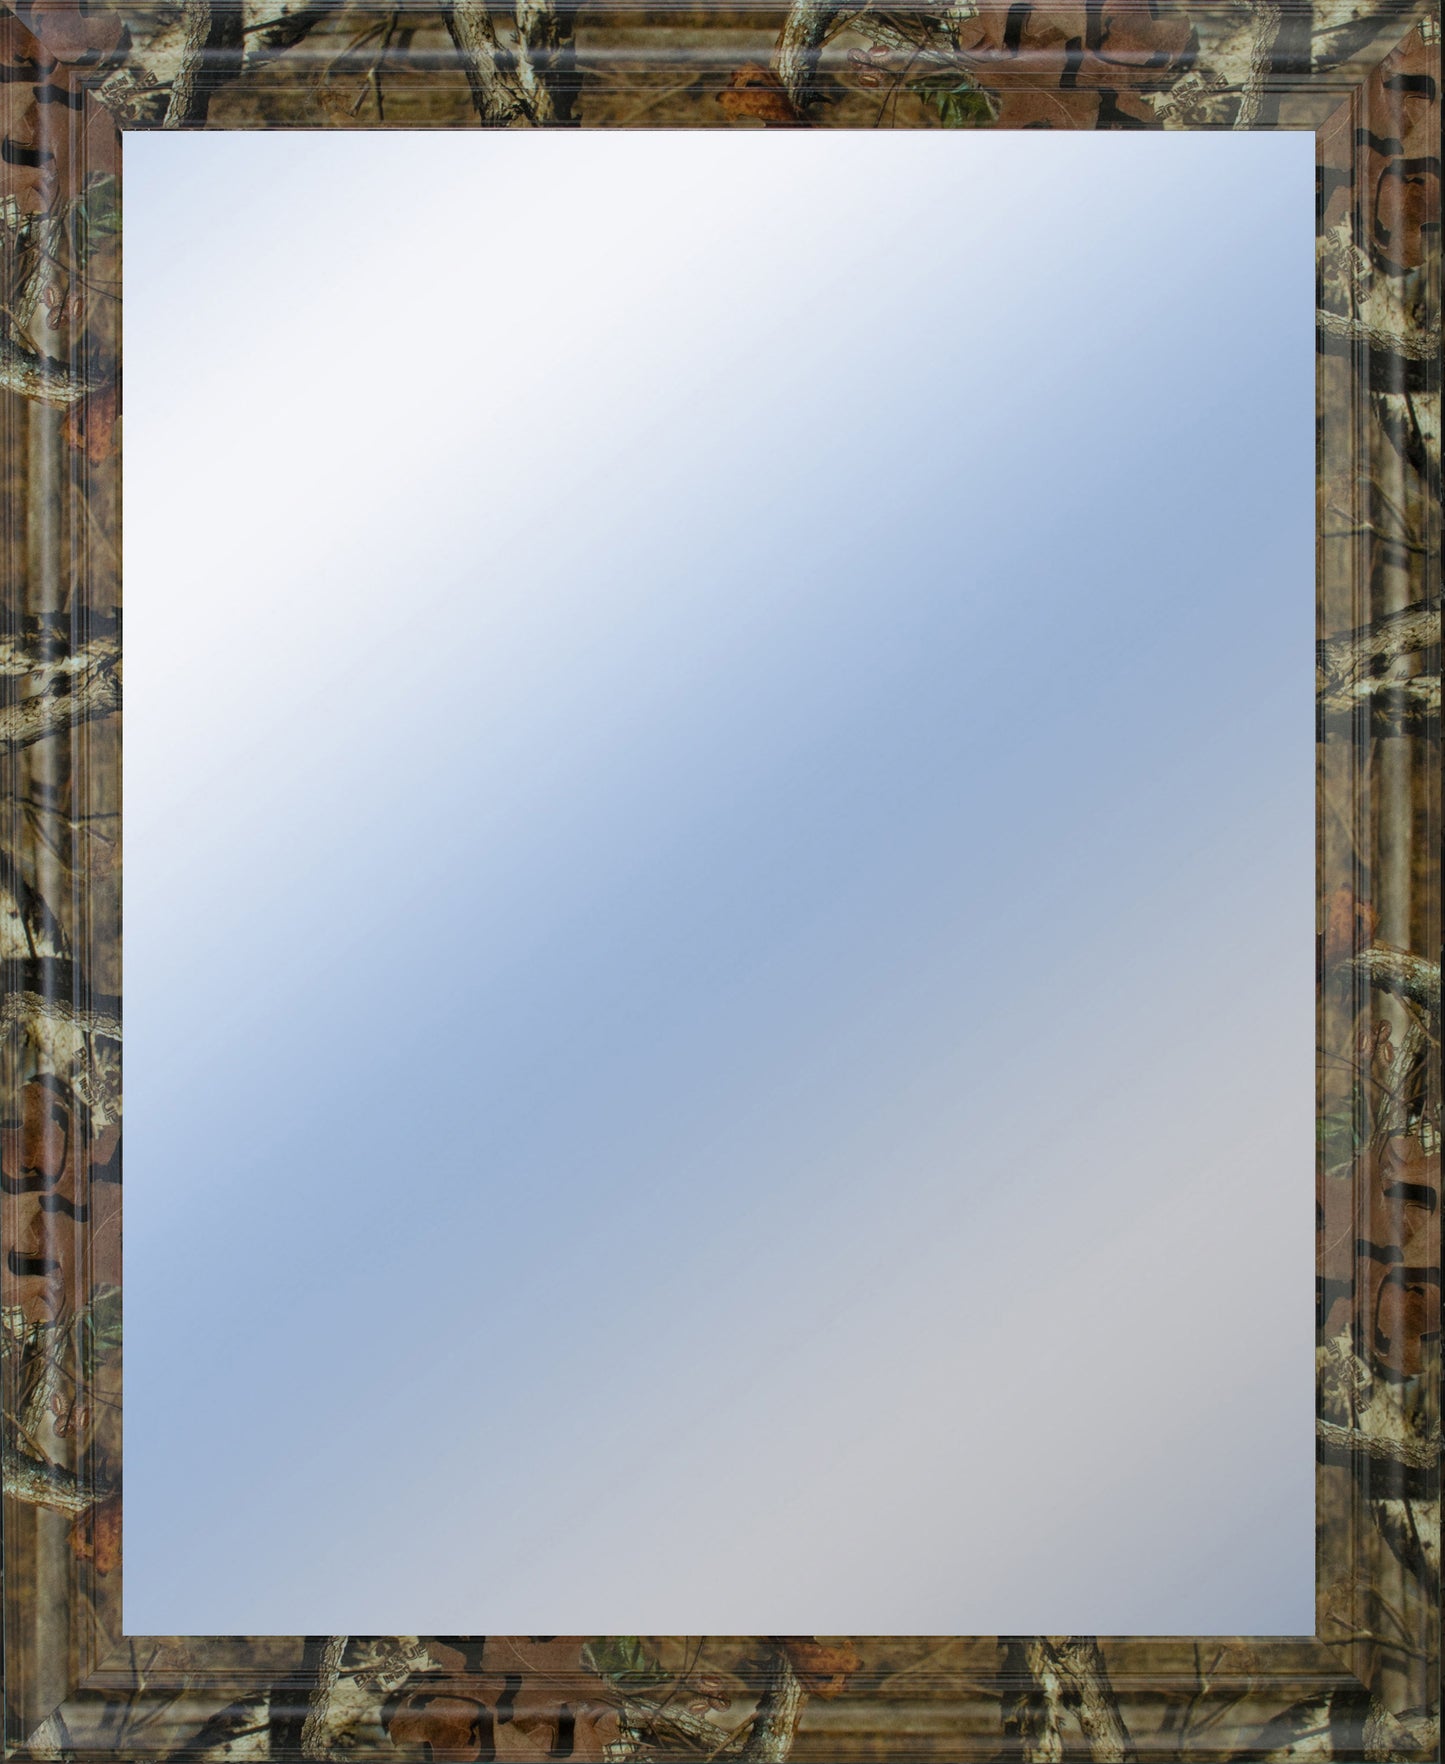 34x40 Decorative Framed Wall Mirror By Classy Art Promotional Mirror Frame #43 - Dark Brown